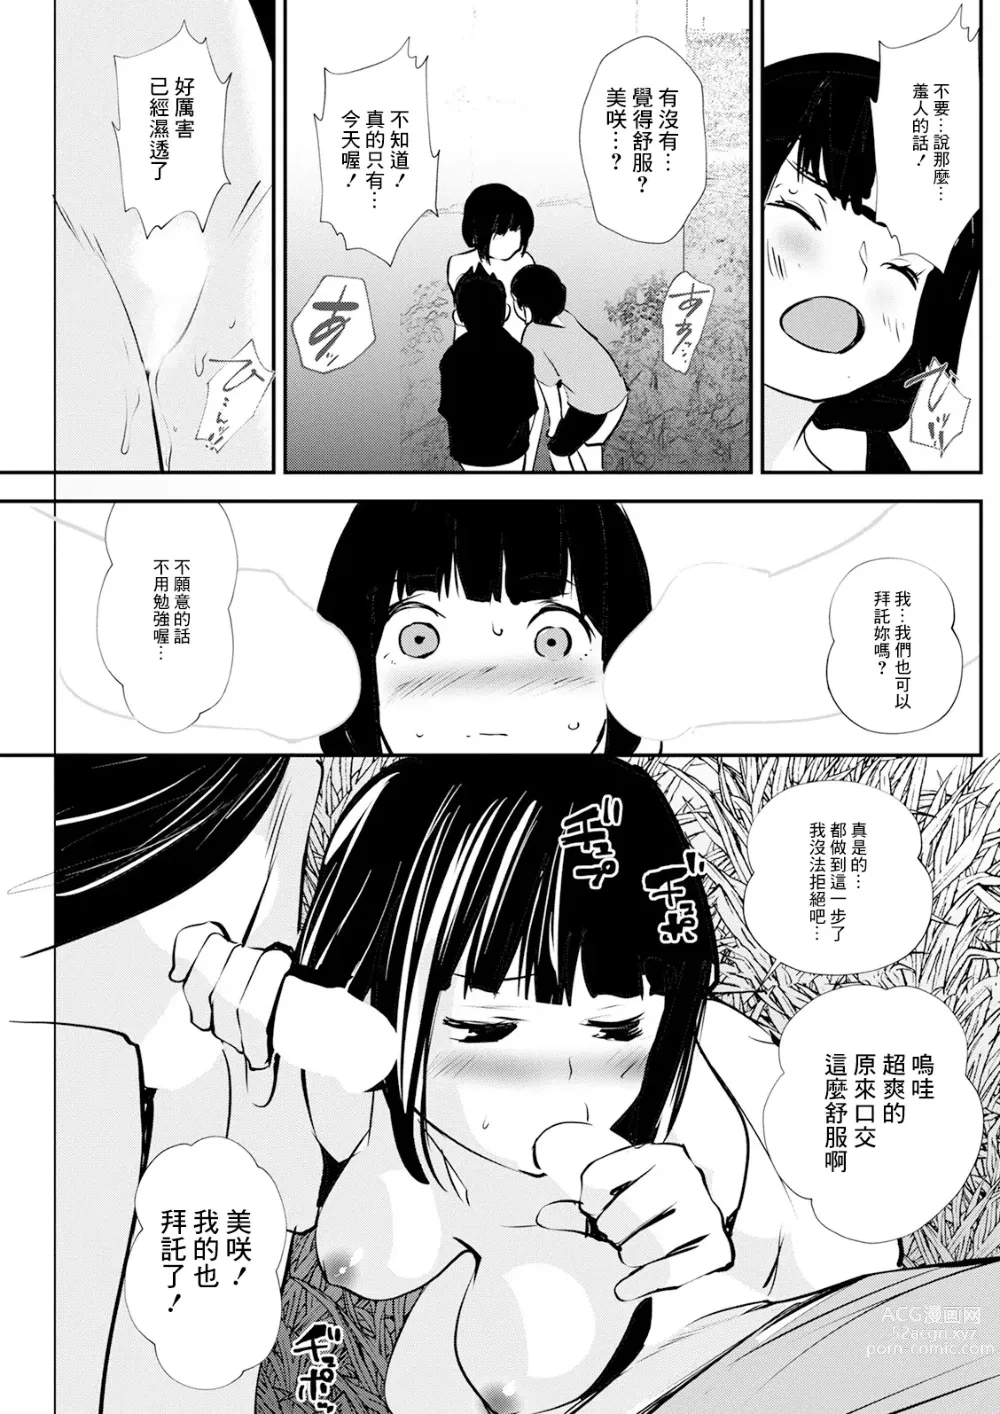 Page 7 of manga 3-nin no Yakusoku - Promise of three